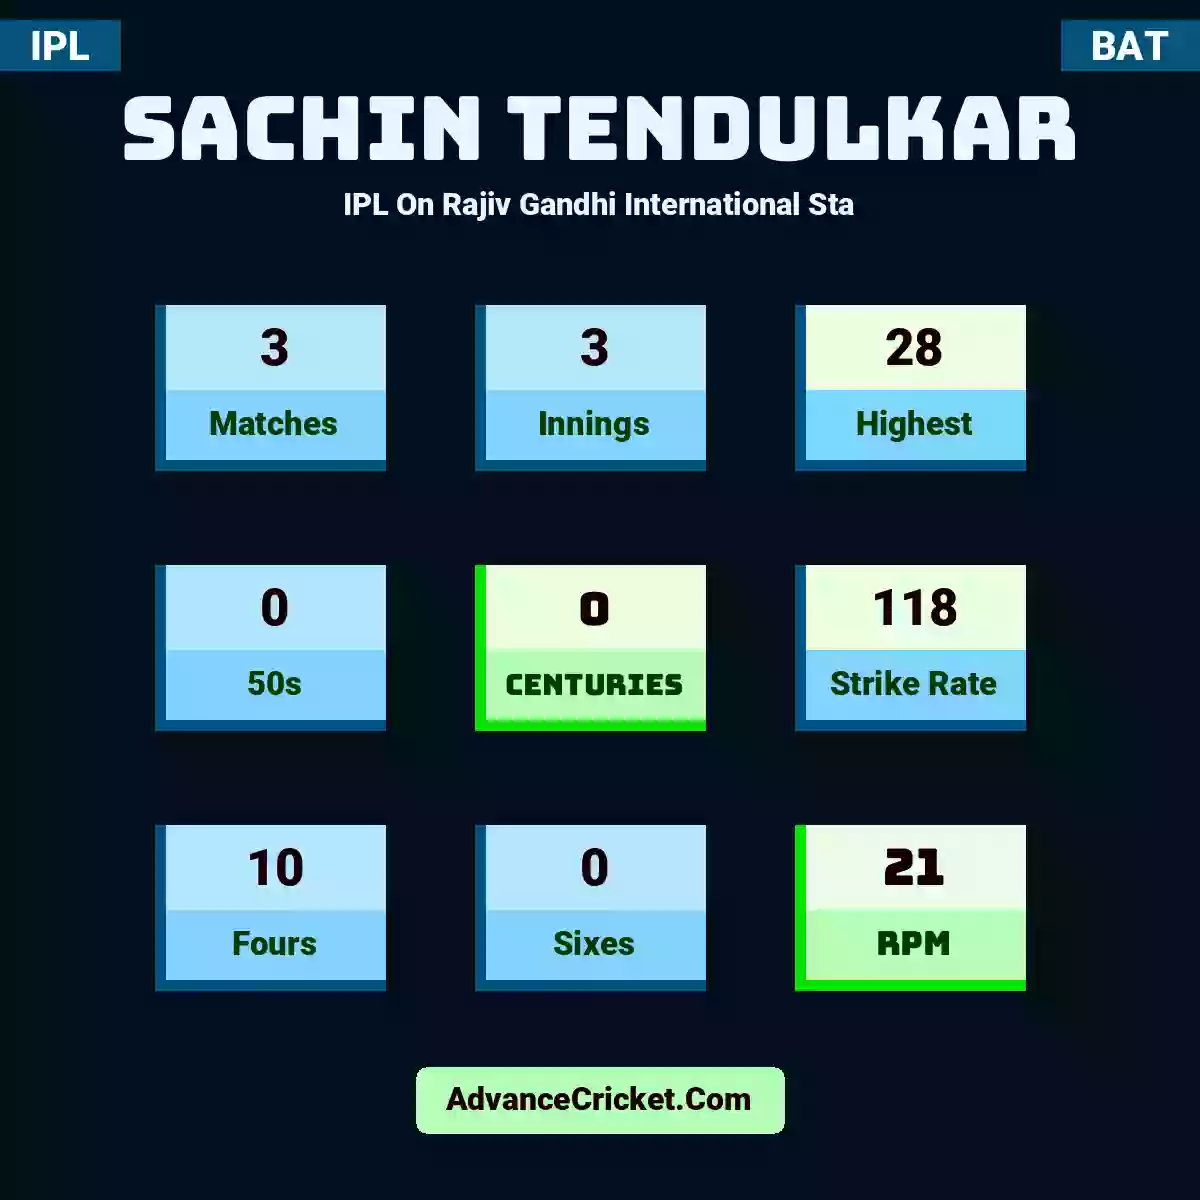 Sachin Tendulkar IPL  On Rajiv Gandhi International Sta, Sachin Tendulkar played 3 matches, scored 28 runs as highest, 0 half-centuries, and 0 centuries, with a strike rate of 118. S.Tendulkar hit 10 fours and 0 sixes, with an RPM of 21.